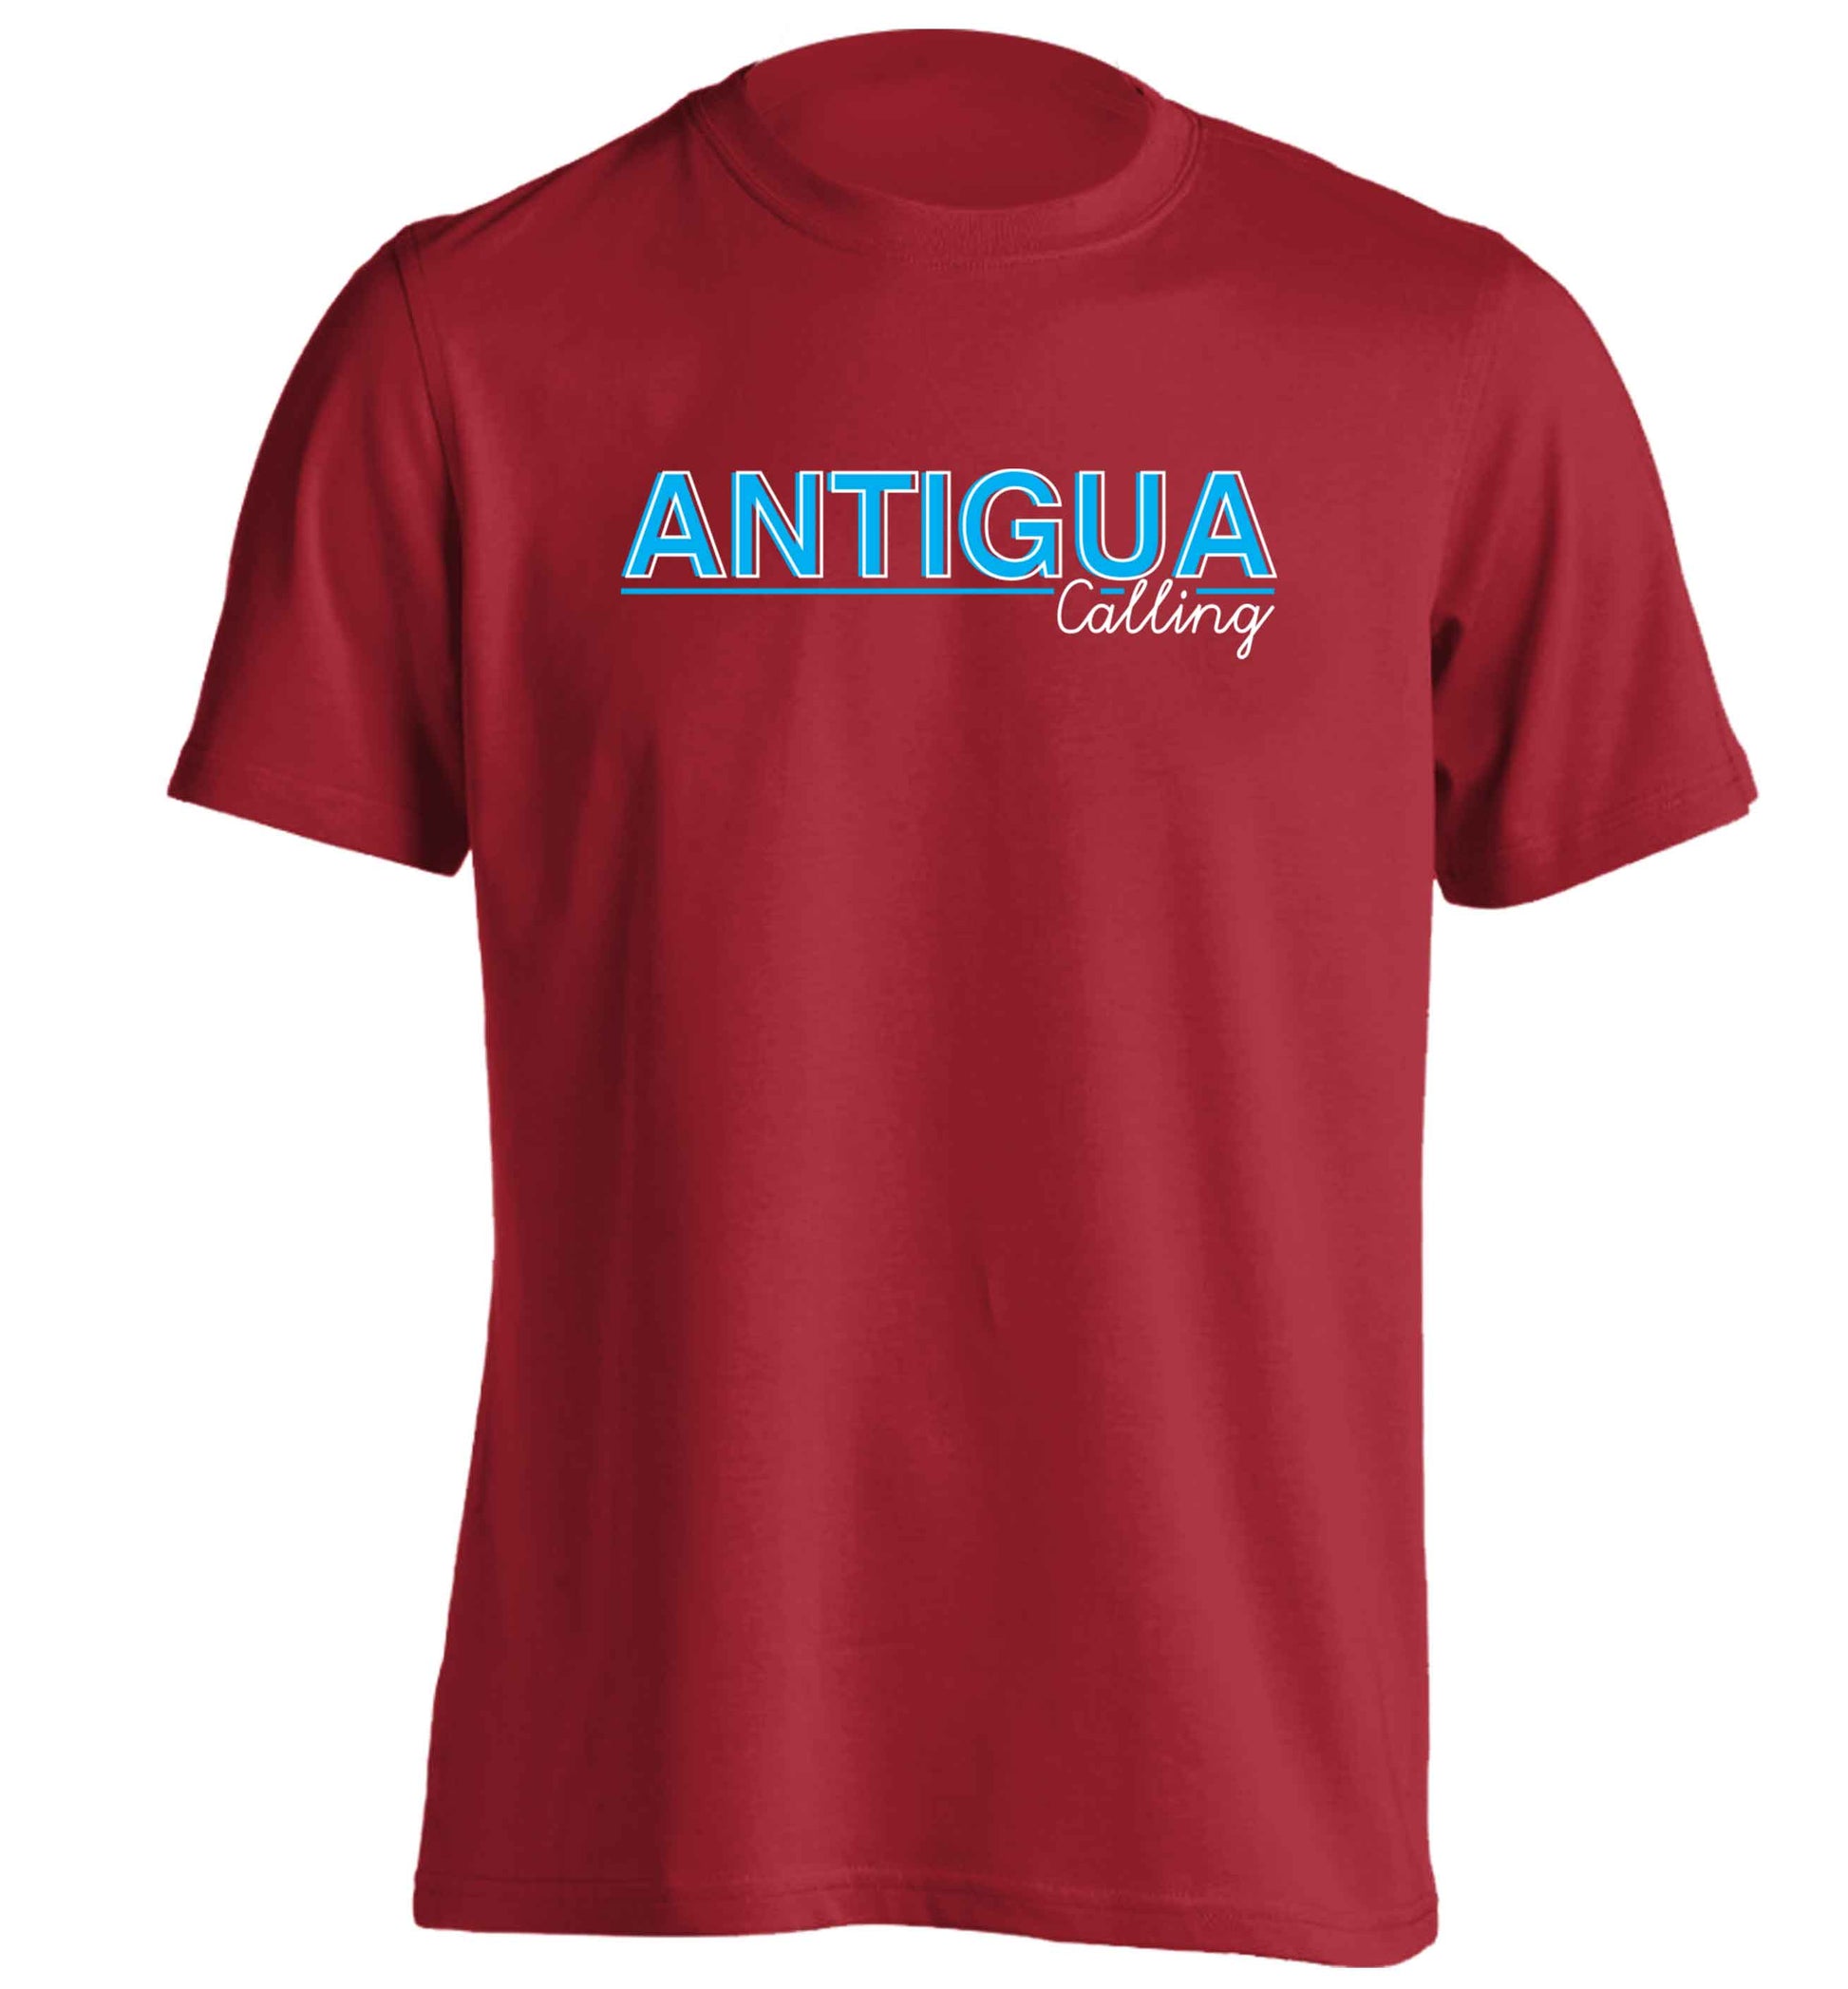 Antigua calling adults unisex red Tshirt 2XL